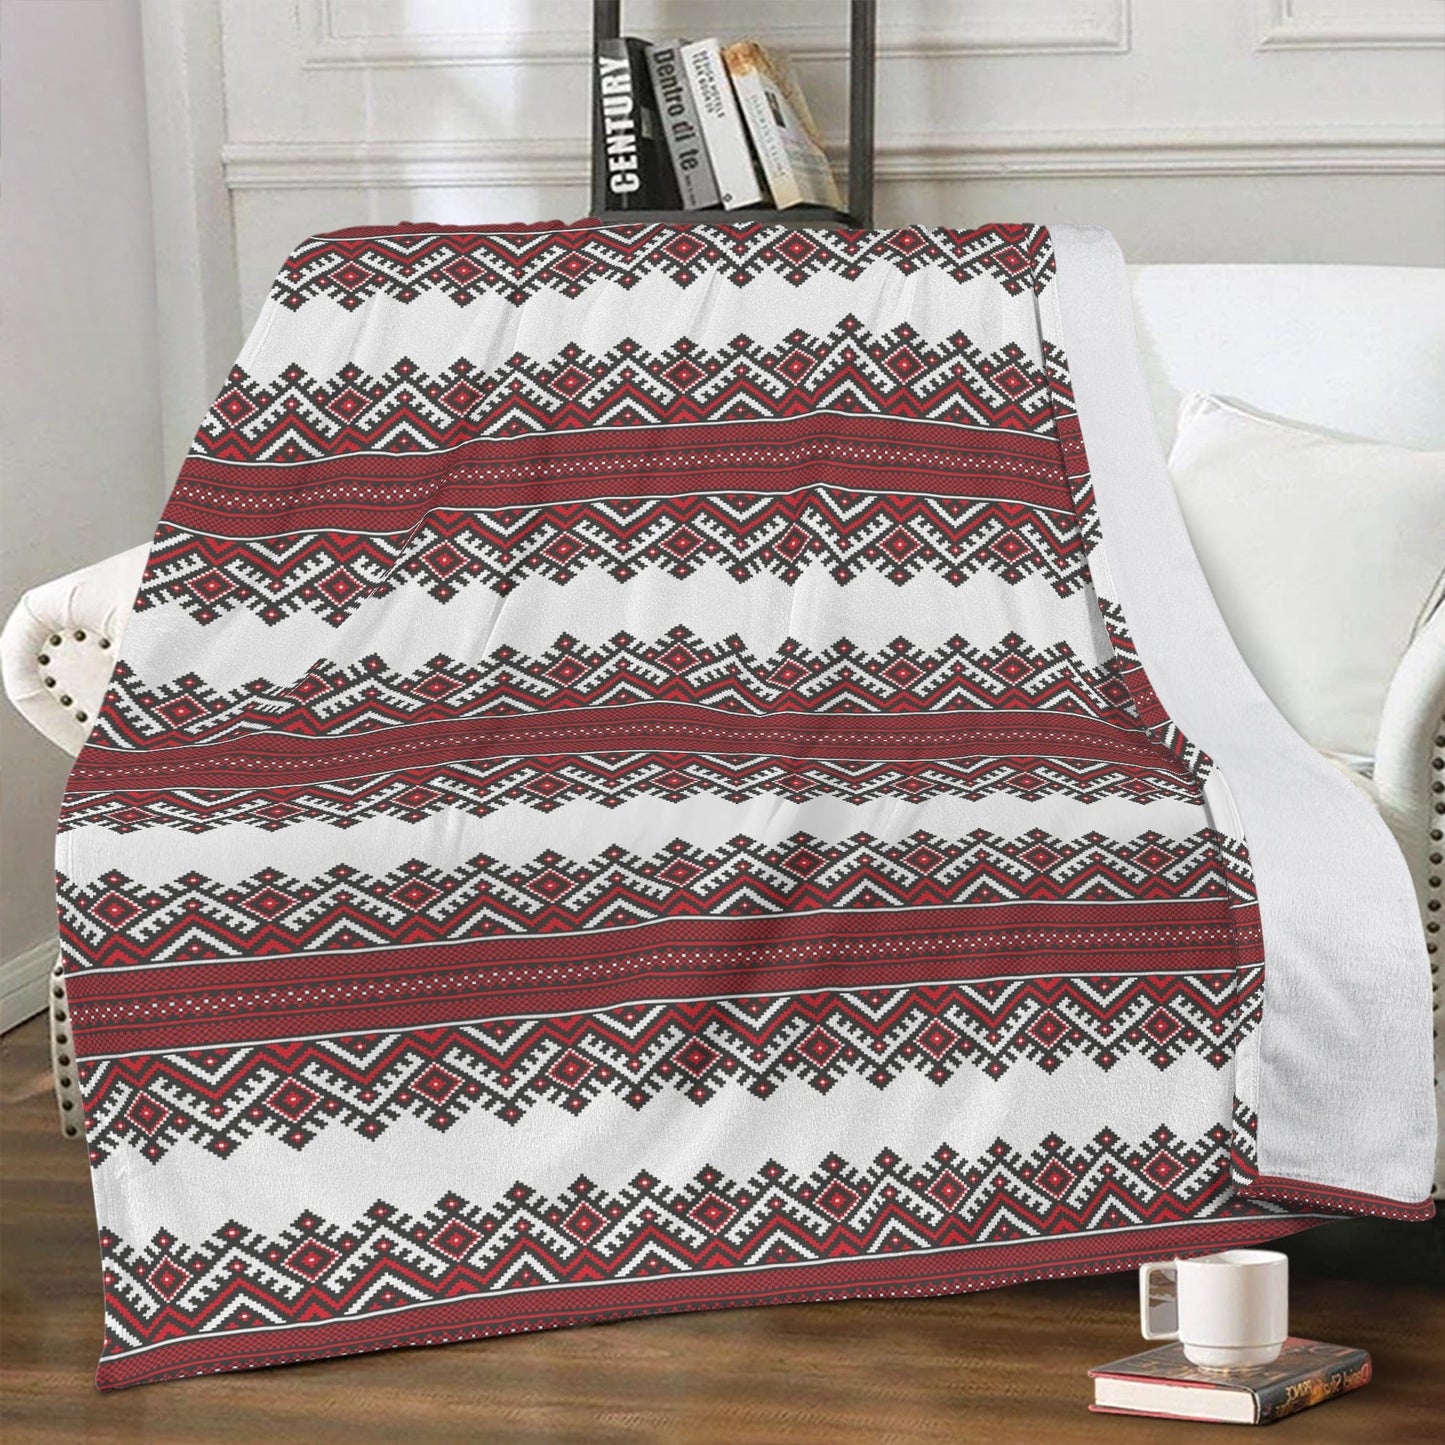 Red and White Ukrainian Folk Art Soft Polyester Premium Fleece Blanket  POP Customs XS (Twin)  